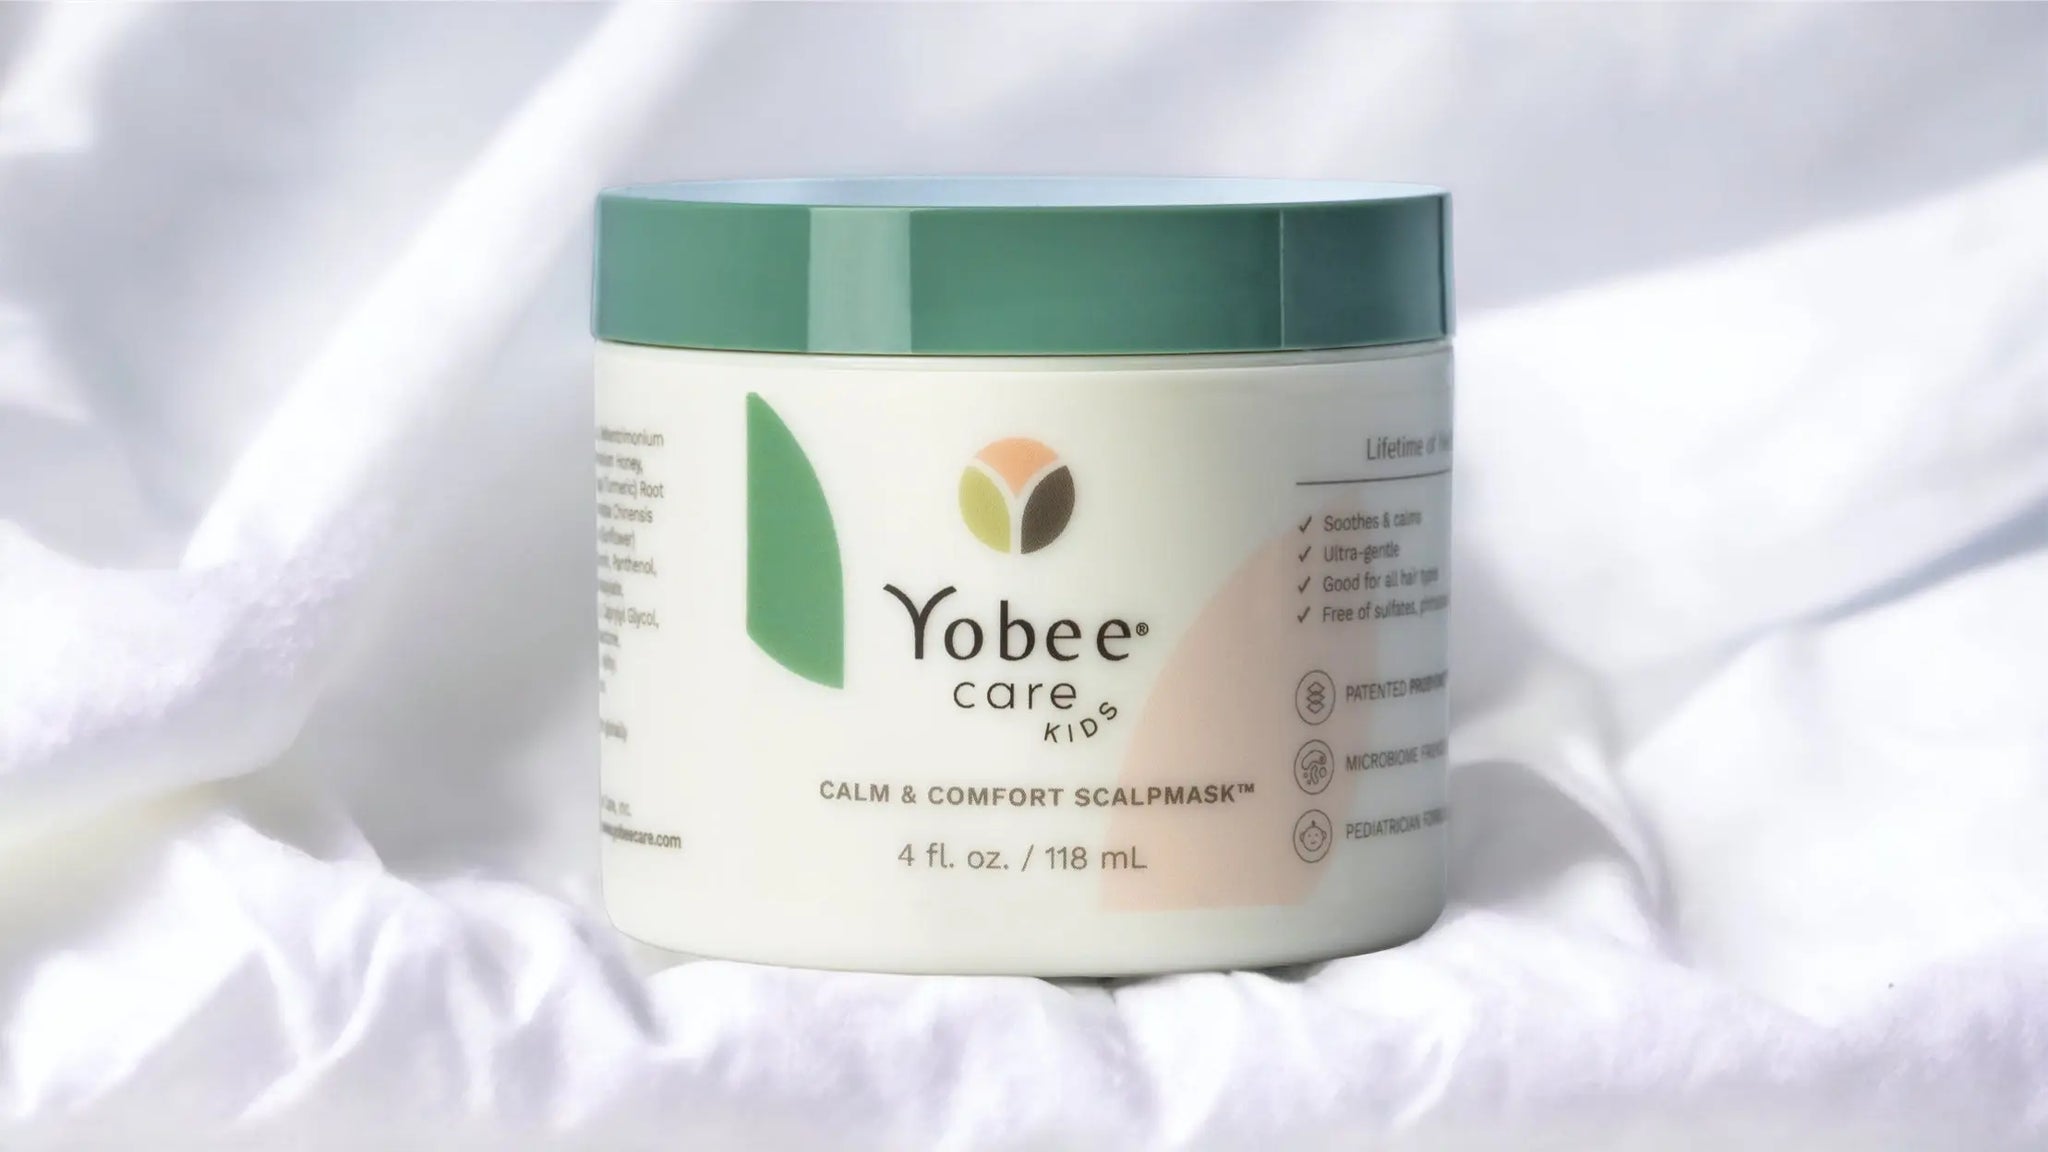 Calm & Comfort ScalpMask for Kids Yobee Care